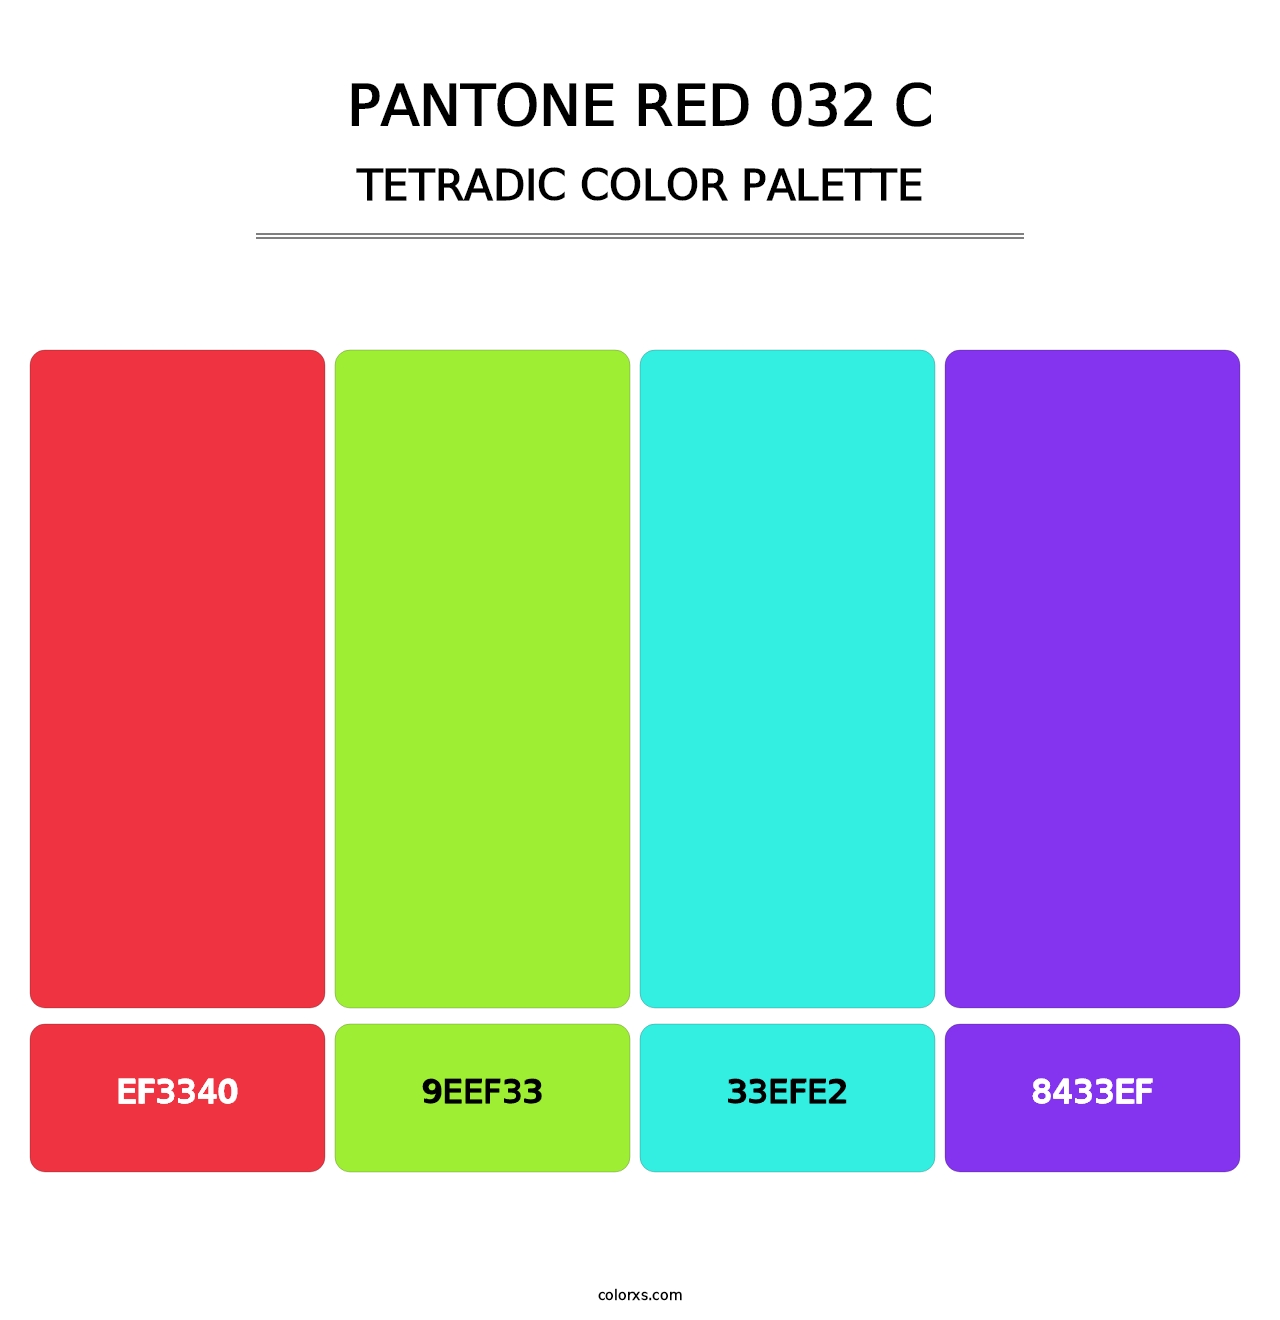 PANTONE Red 032 C - Tetradic Color Palette